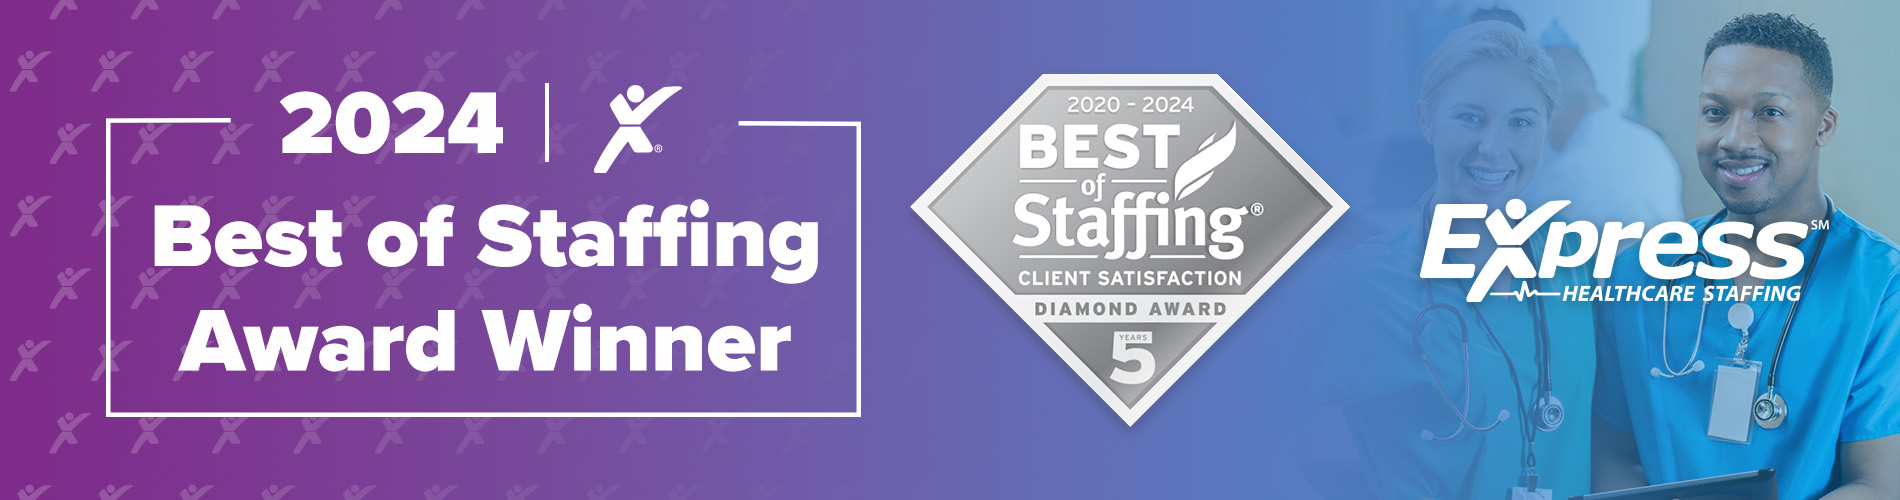 Best-of-Staffing-Client-Award-Home-Banner-2024-EHS